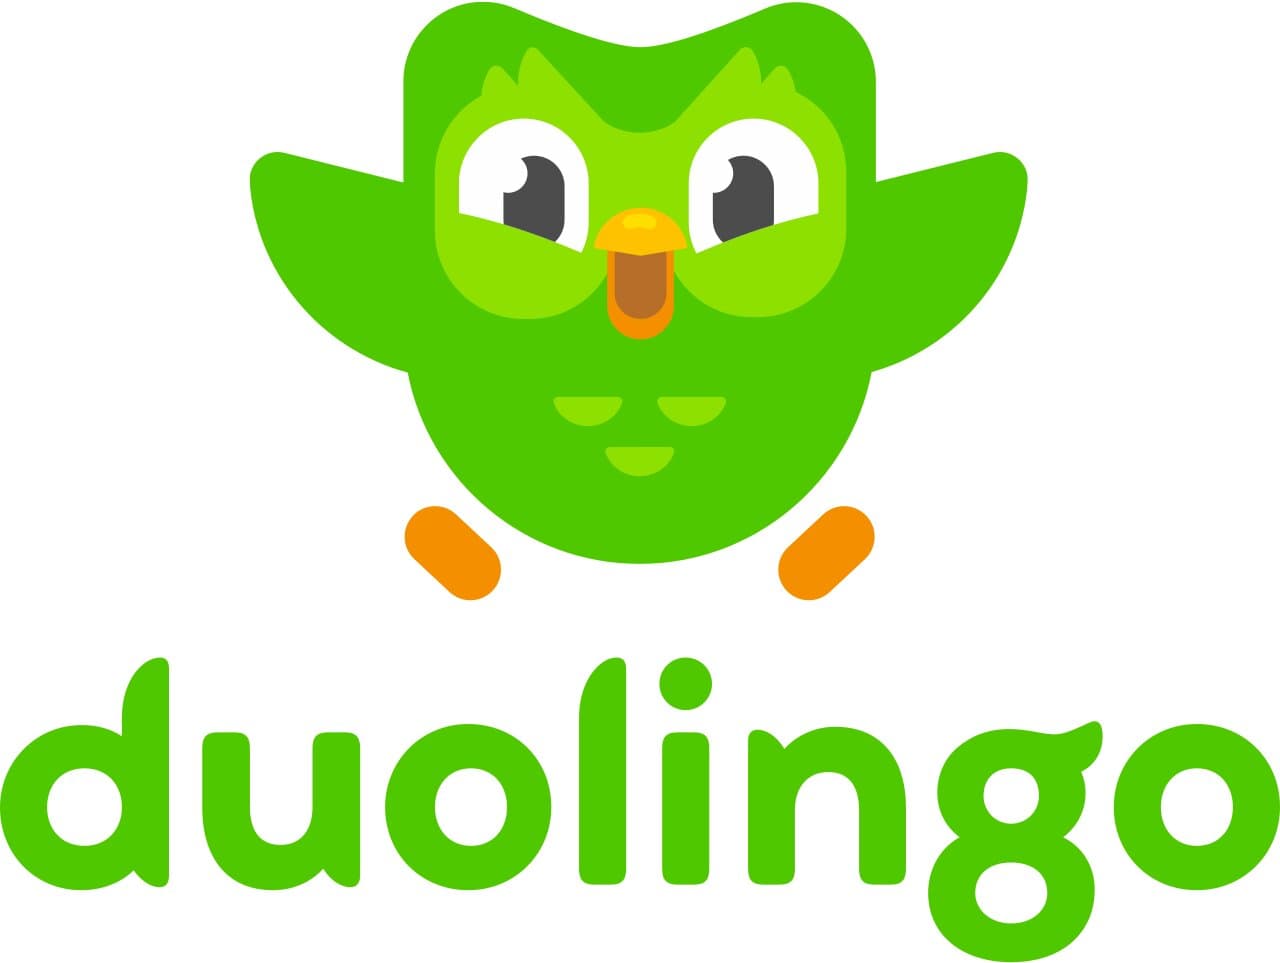 is duolingo free